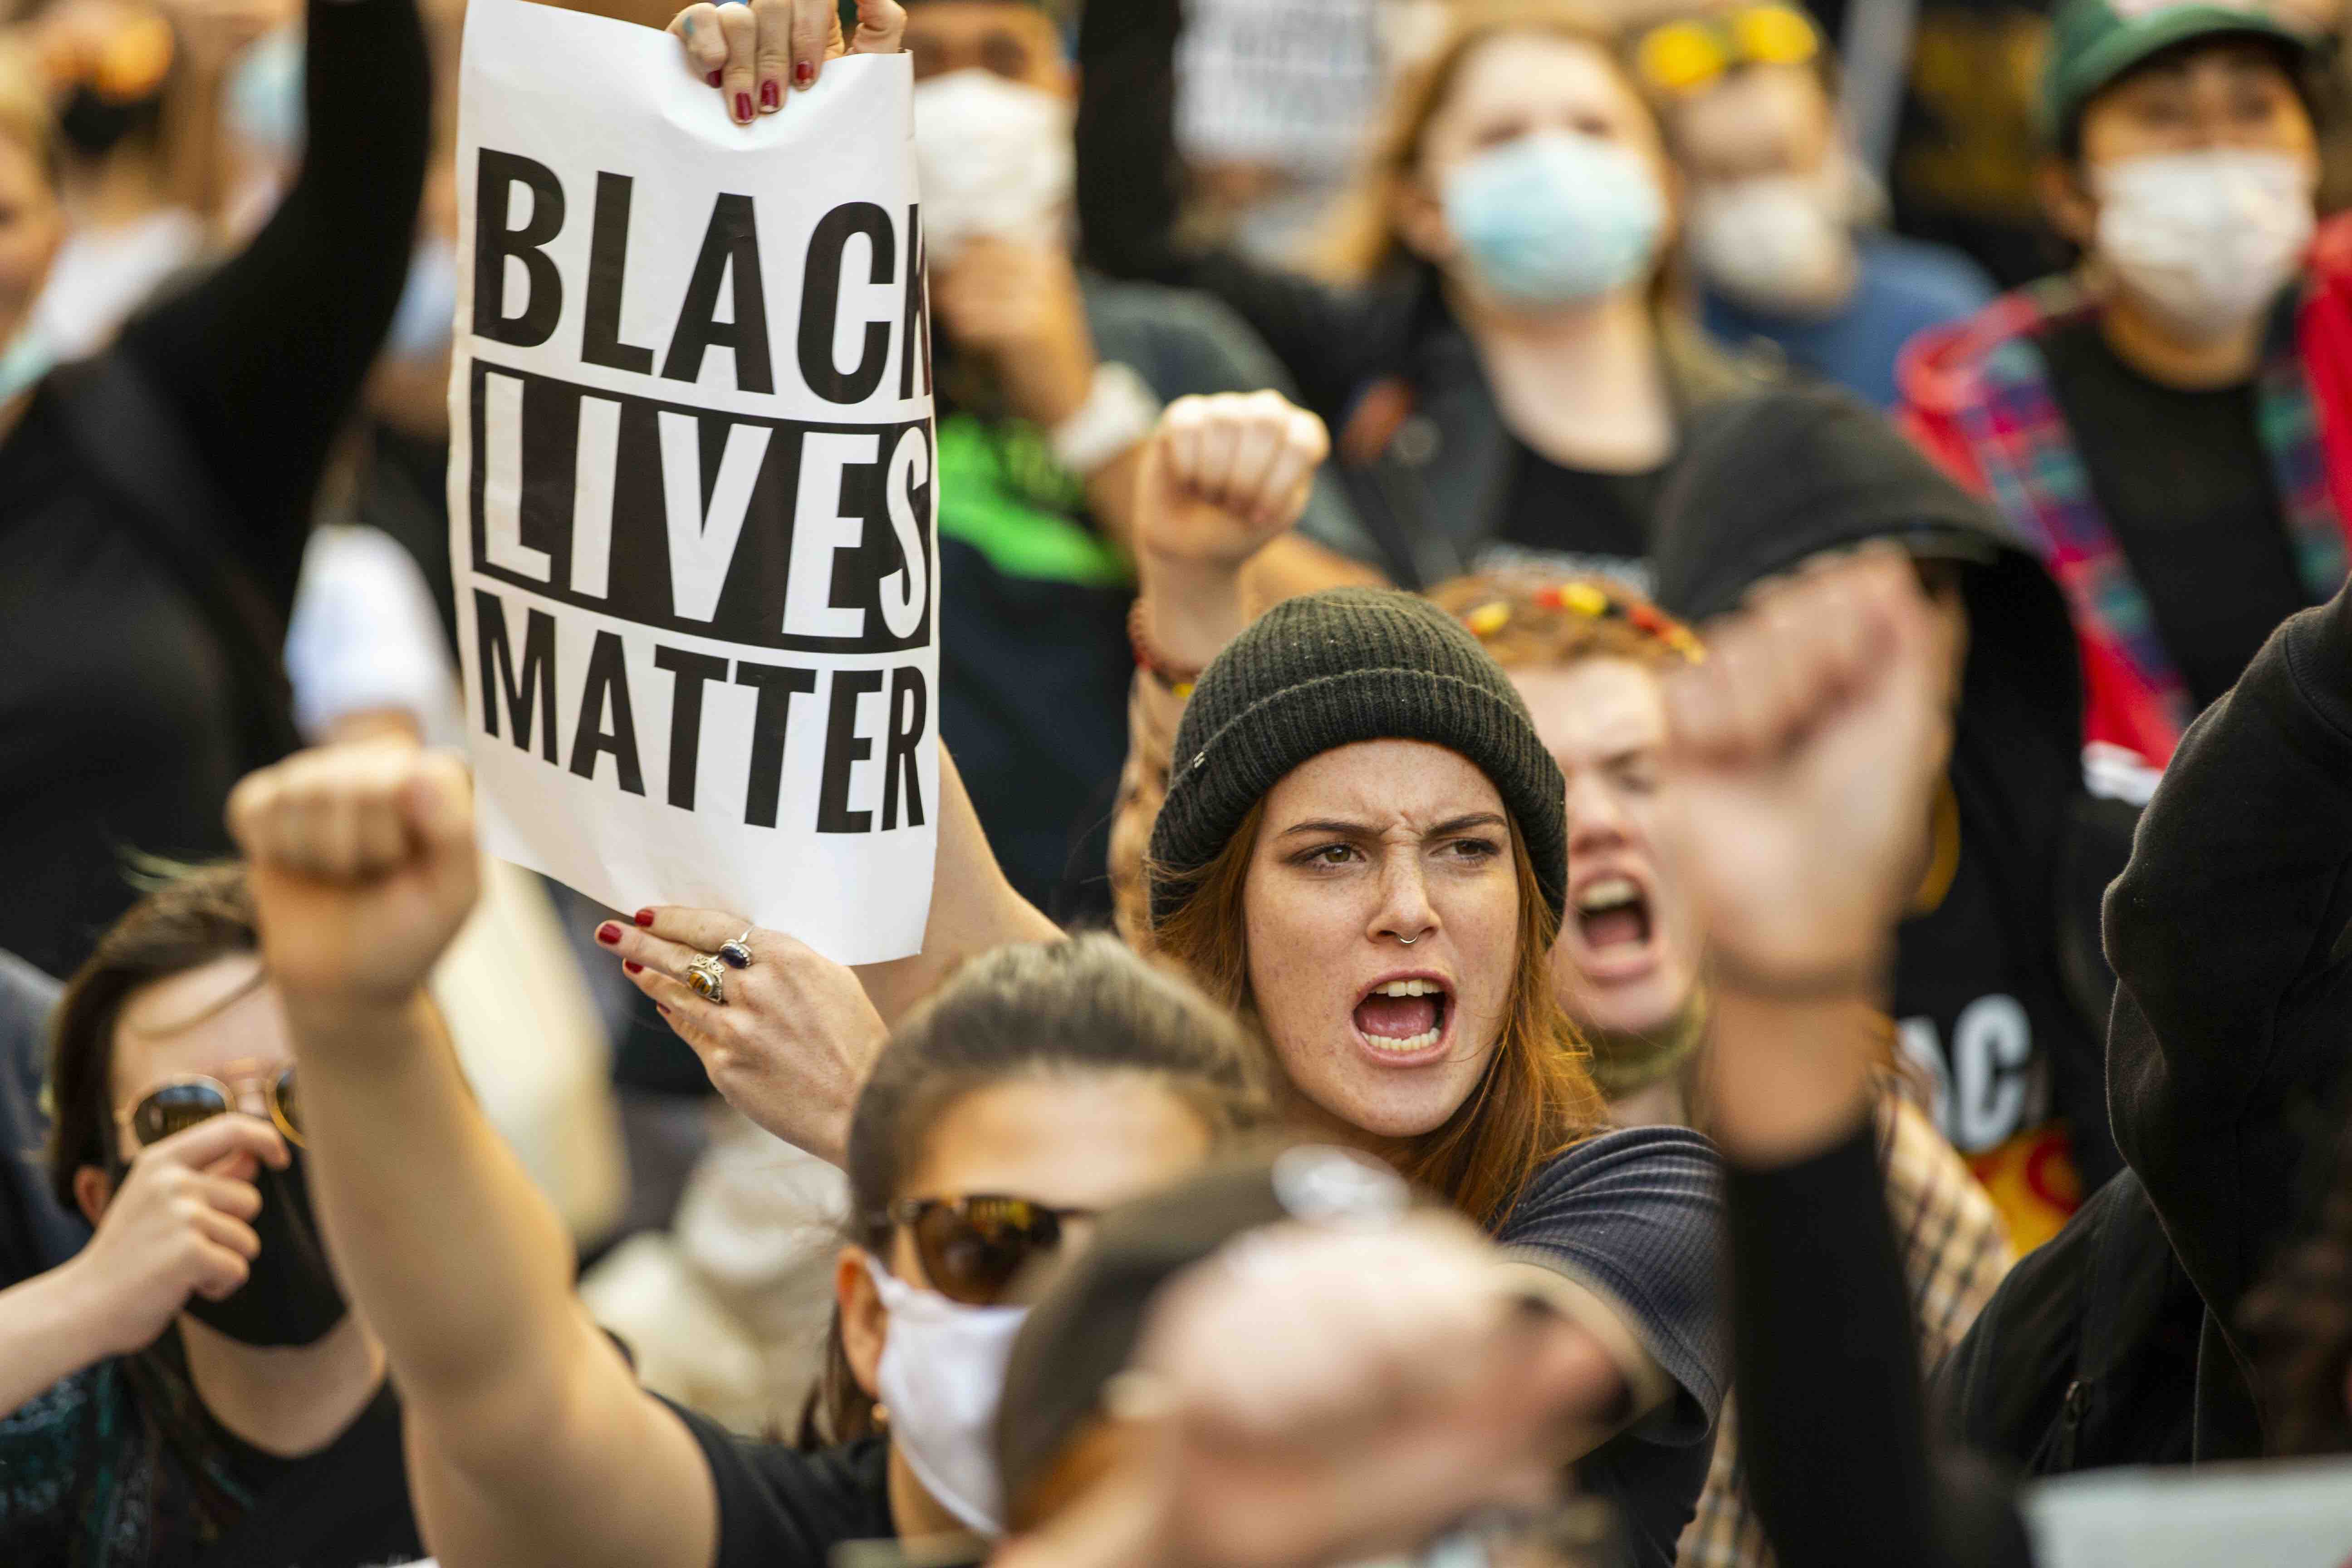 20201106-image-dpa-morning briefing-Black Lives Matter